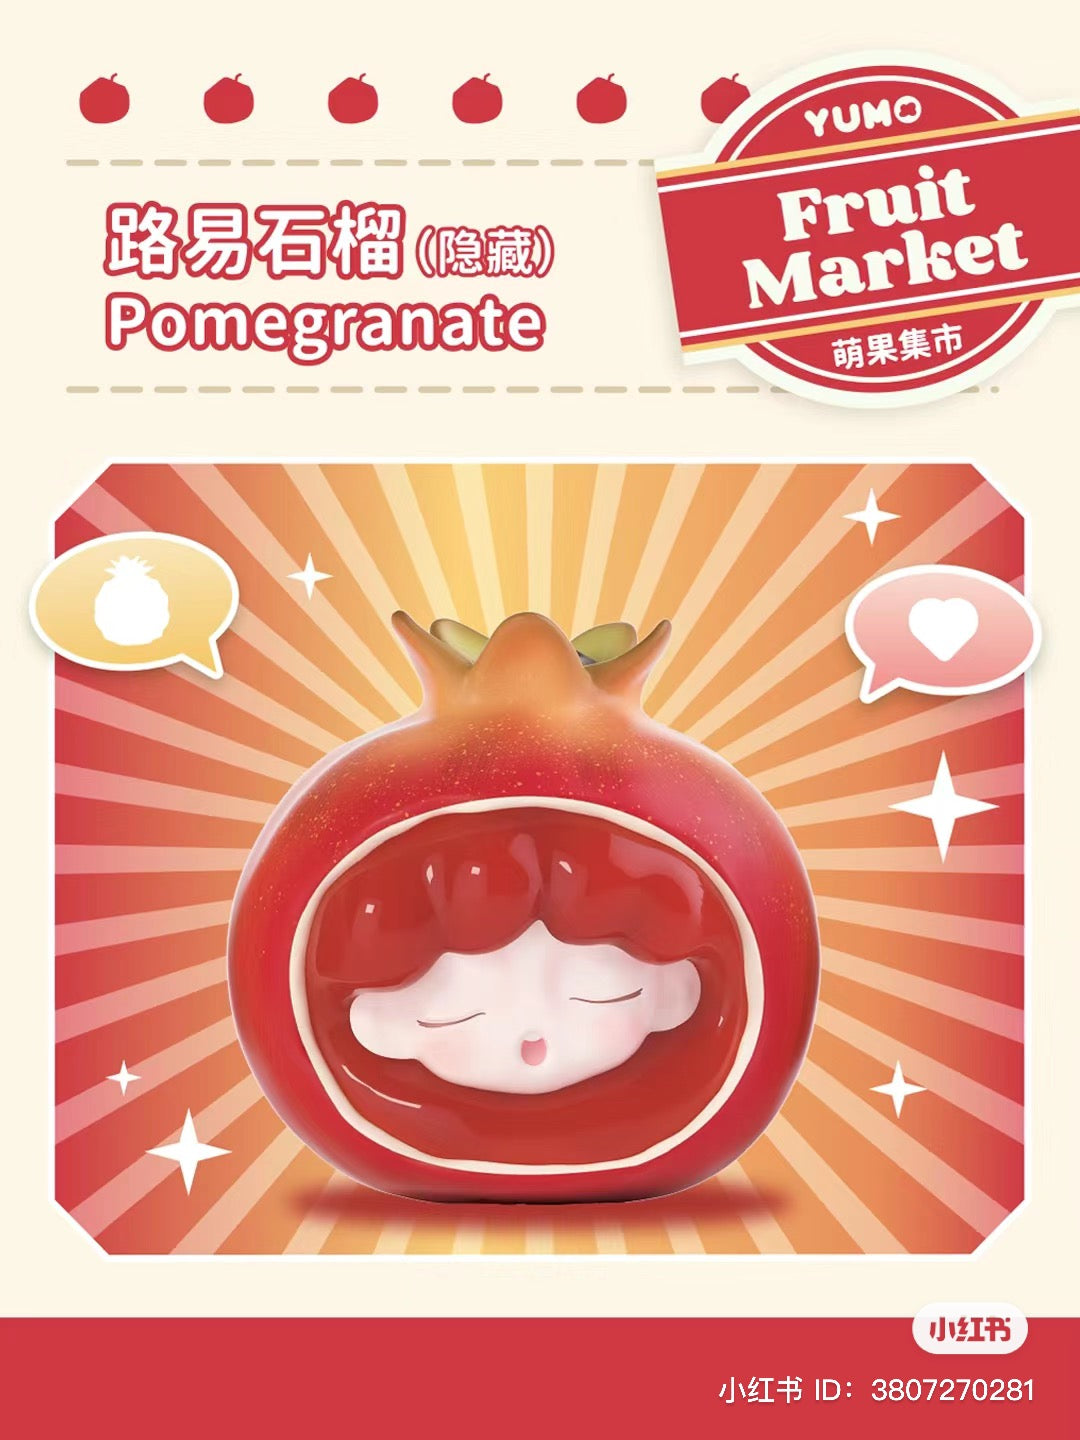 Yumo Fruit Market Blind Box Series - Preorder